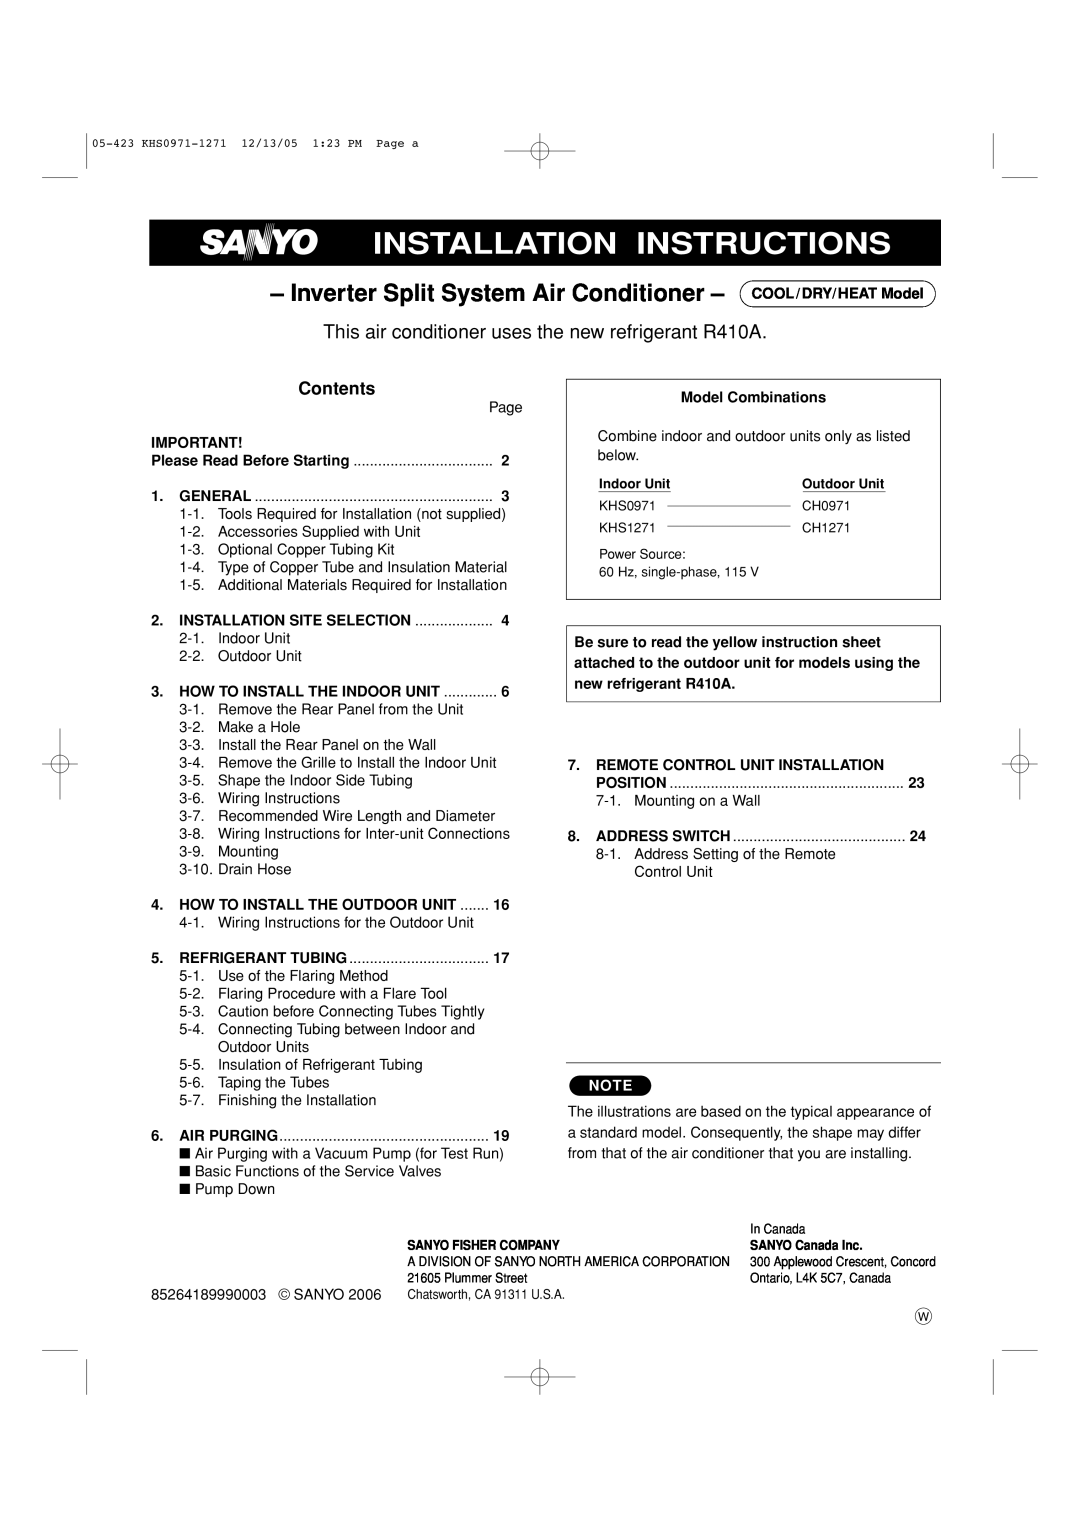 Sanyo 8.53E+13 installation instructions Contents, Installation Instructions 